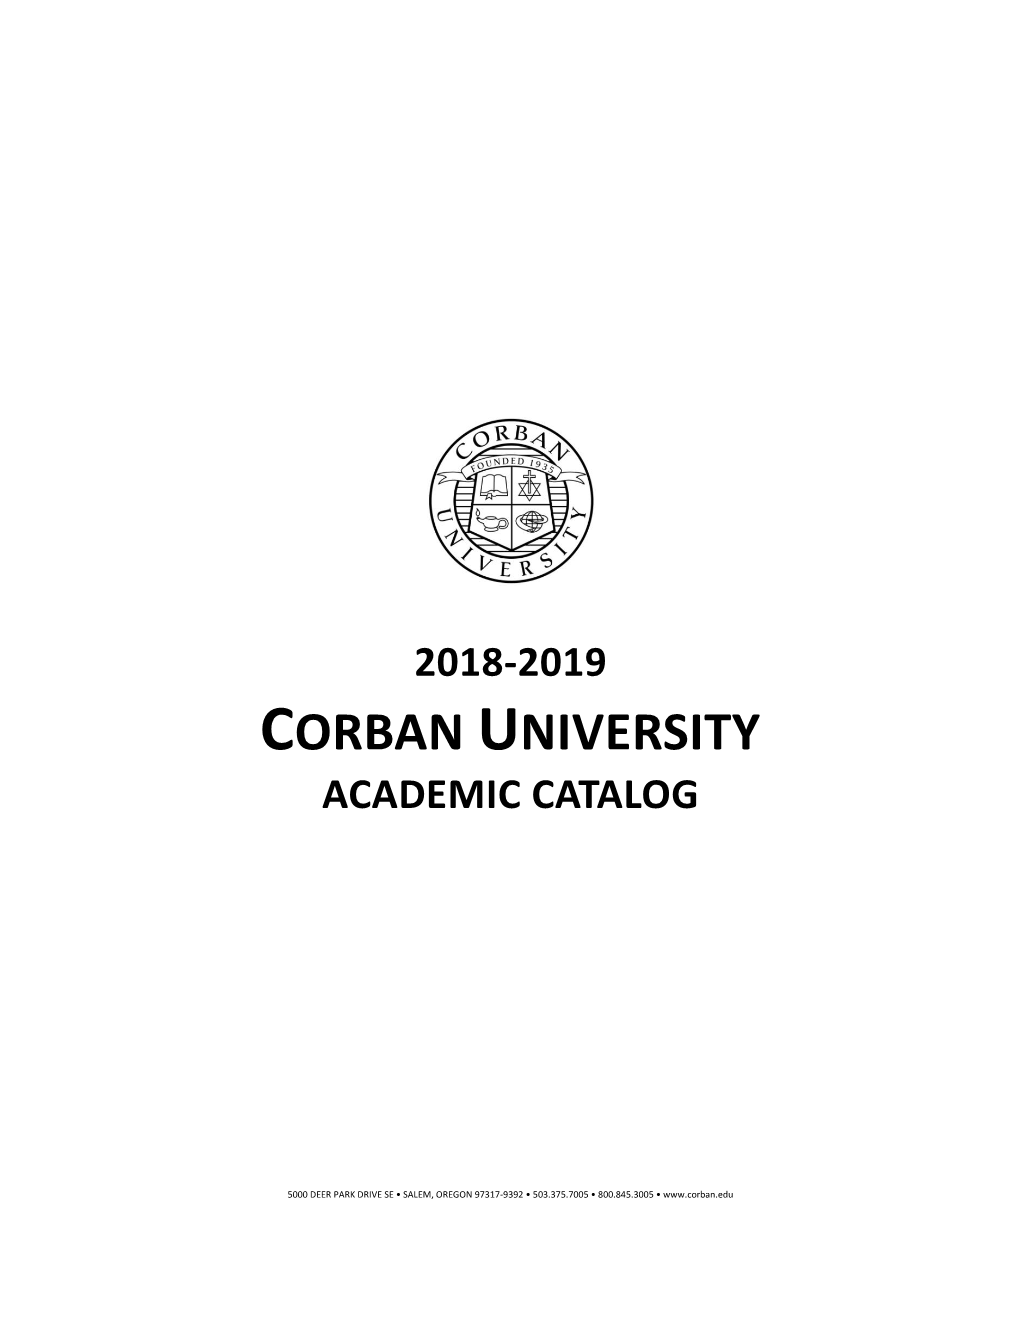 Corban University Academic Catalog